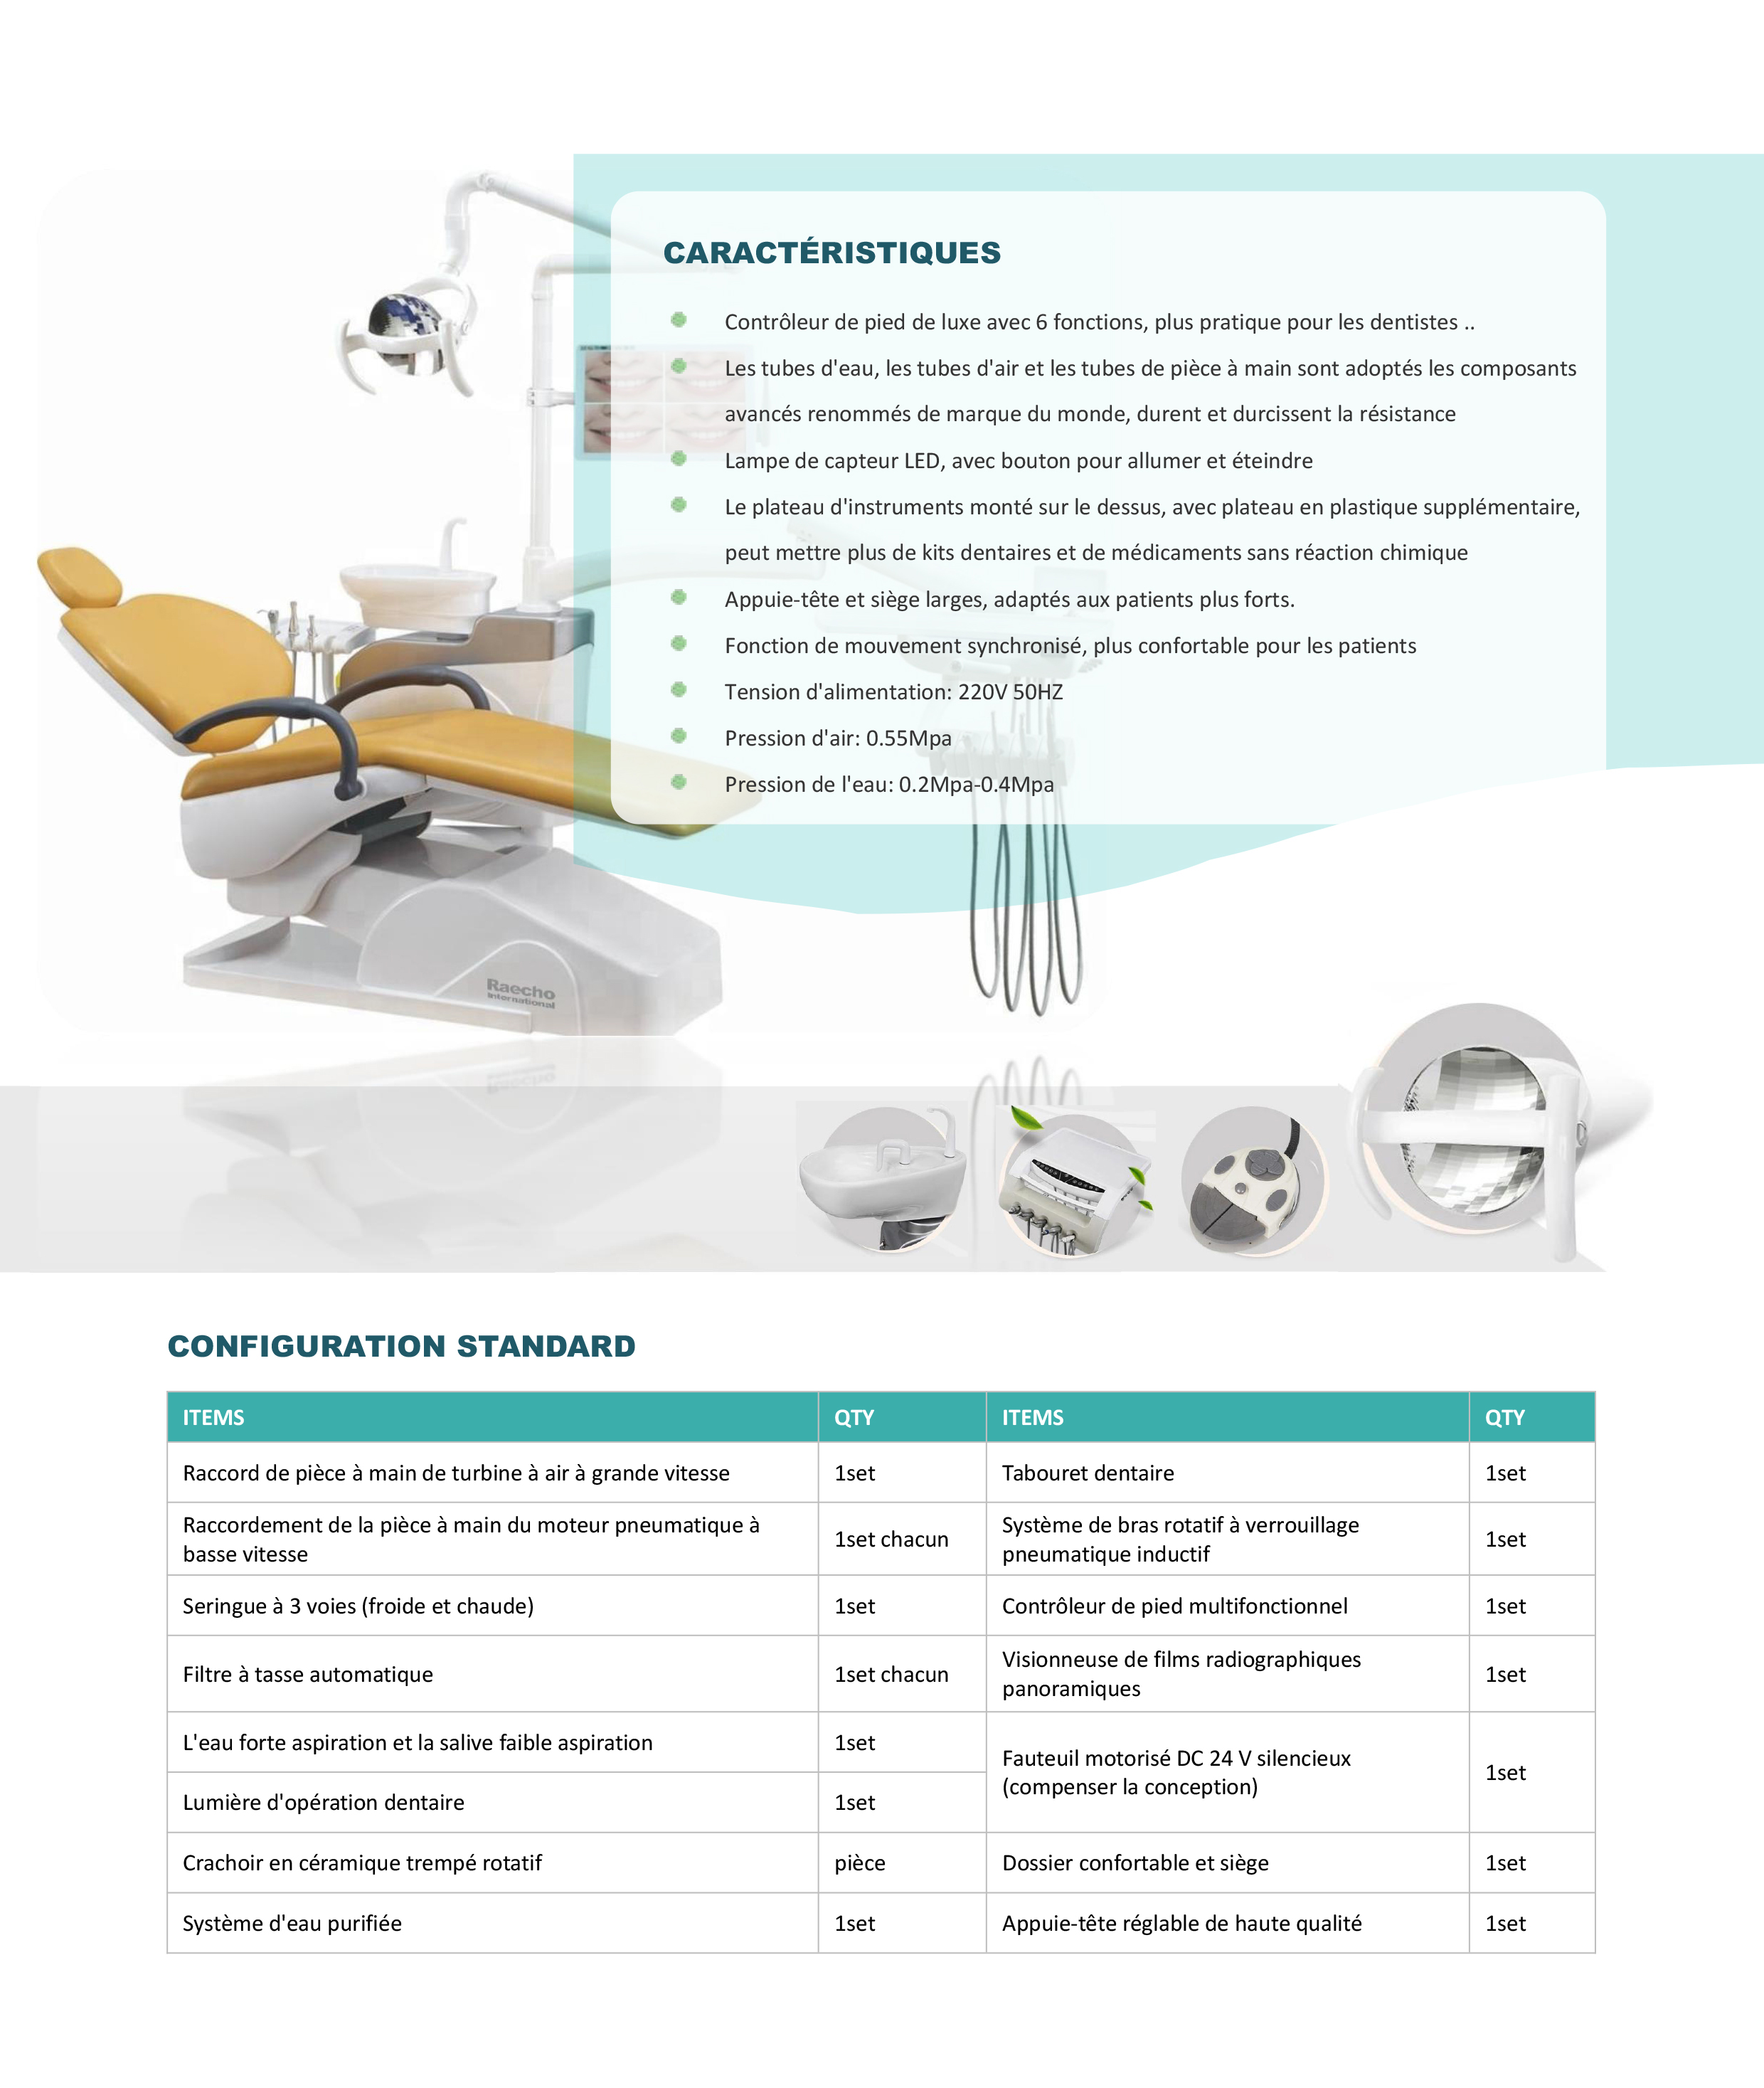 Raecho-Complete Dental Unit -1.jpg